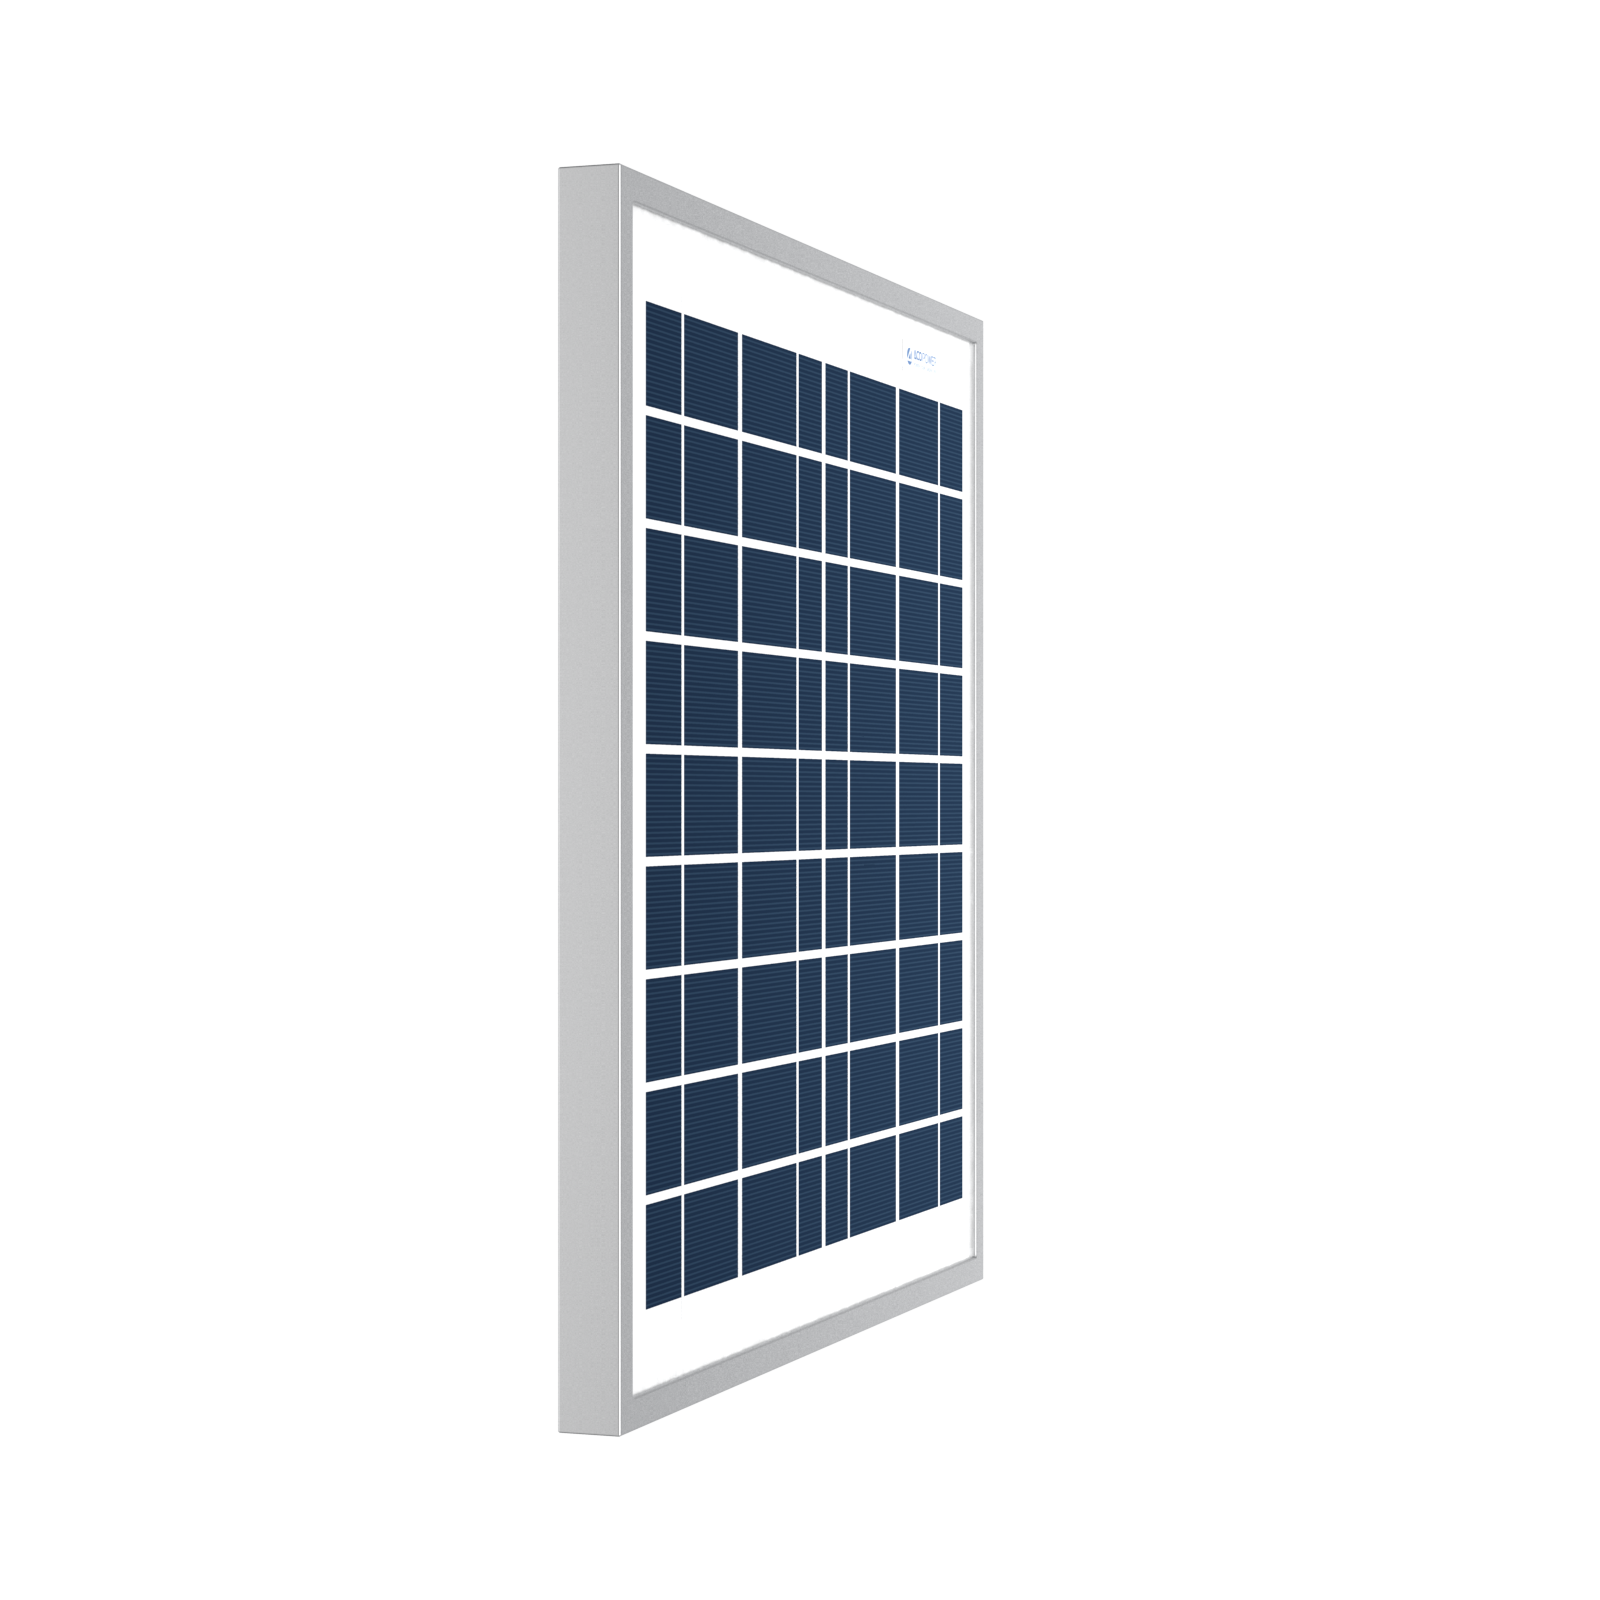 Panel solar 12V 15W DC6